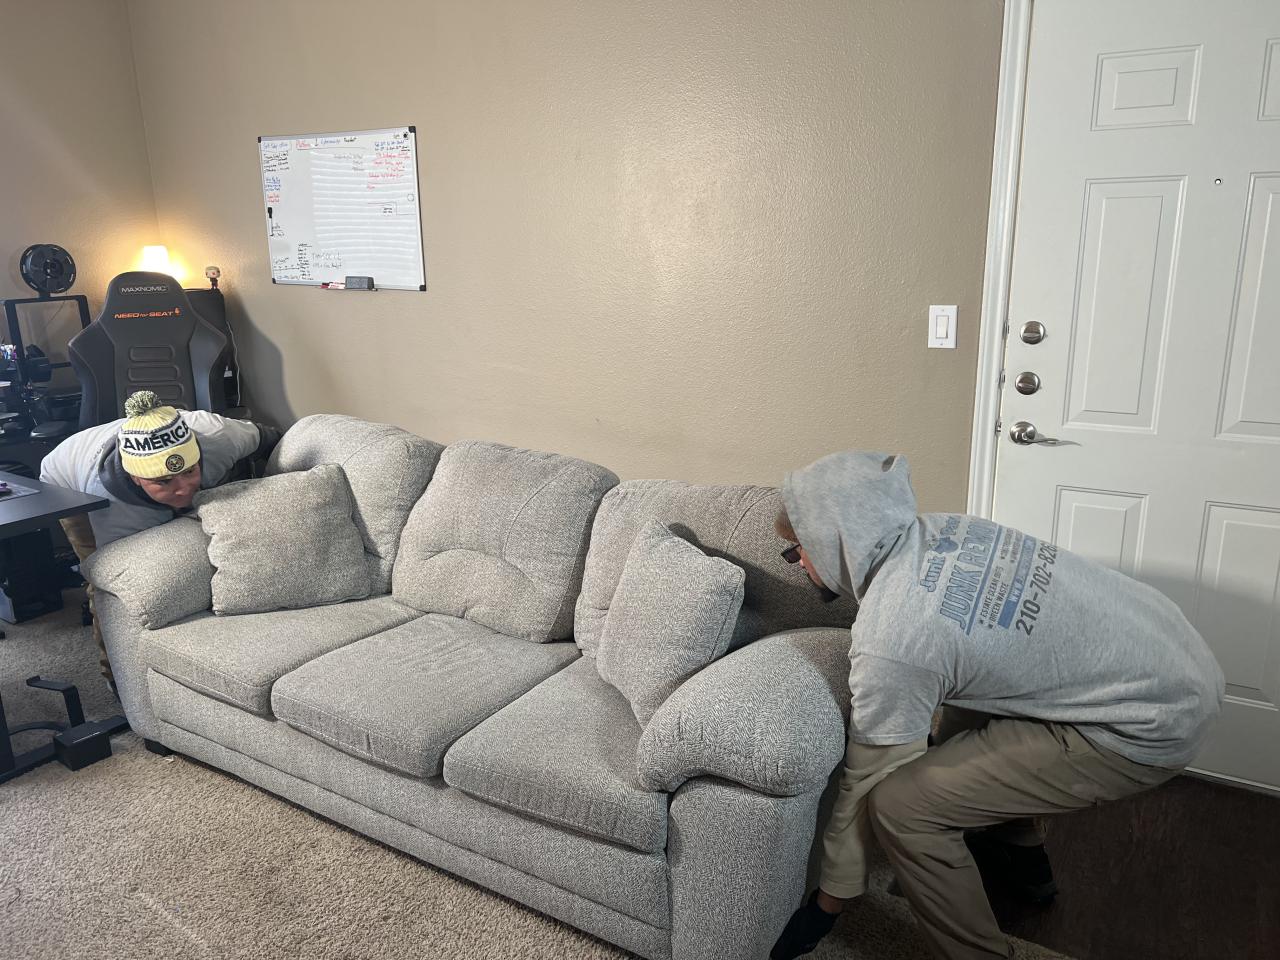 Furniture Removal In San Antonio, Tx